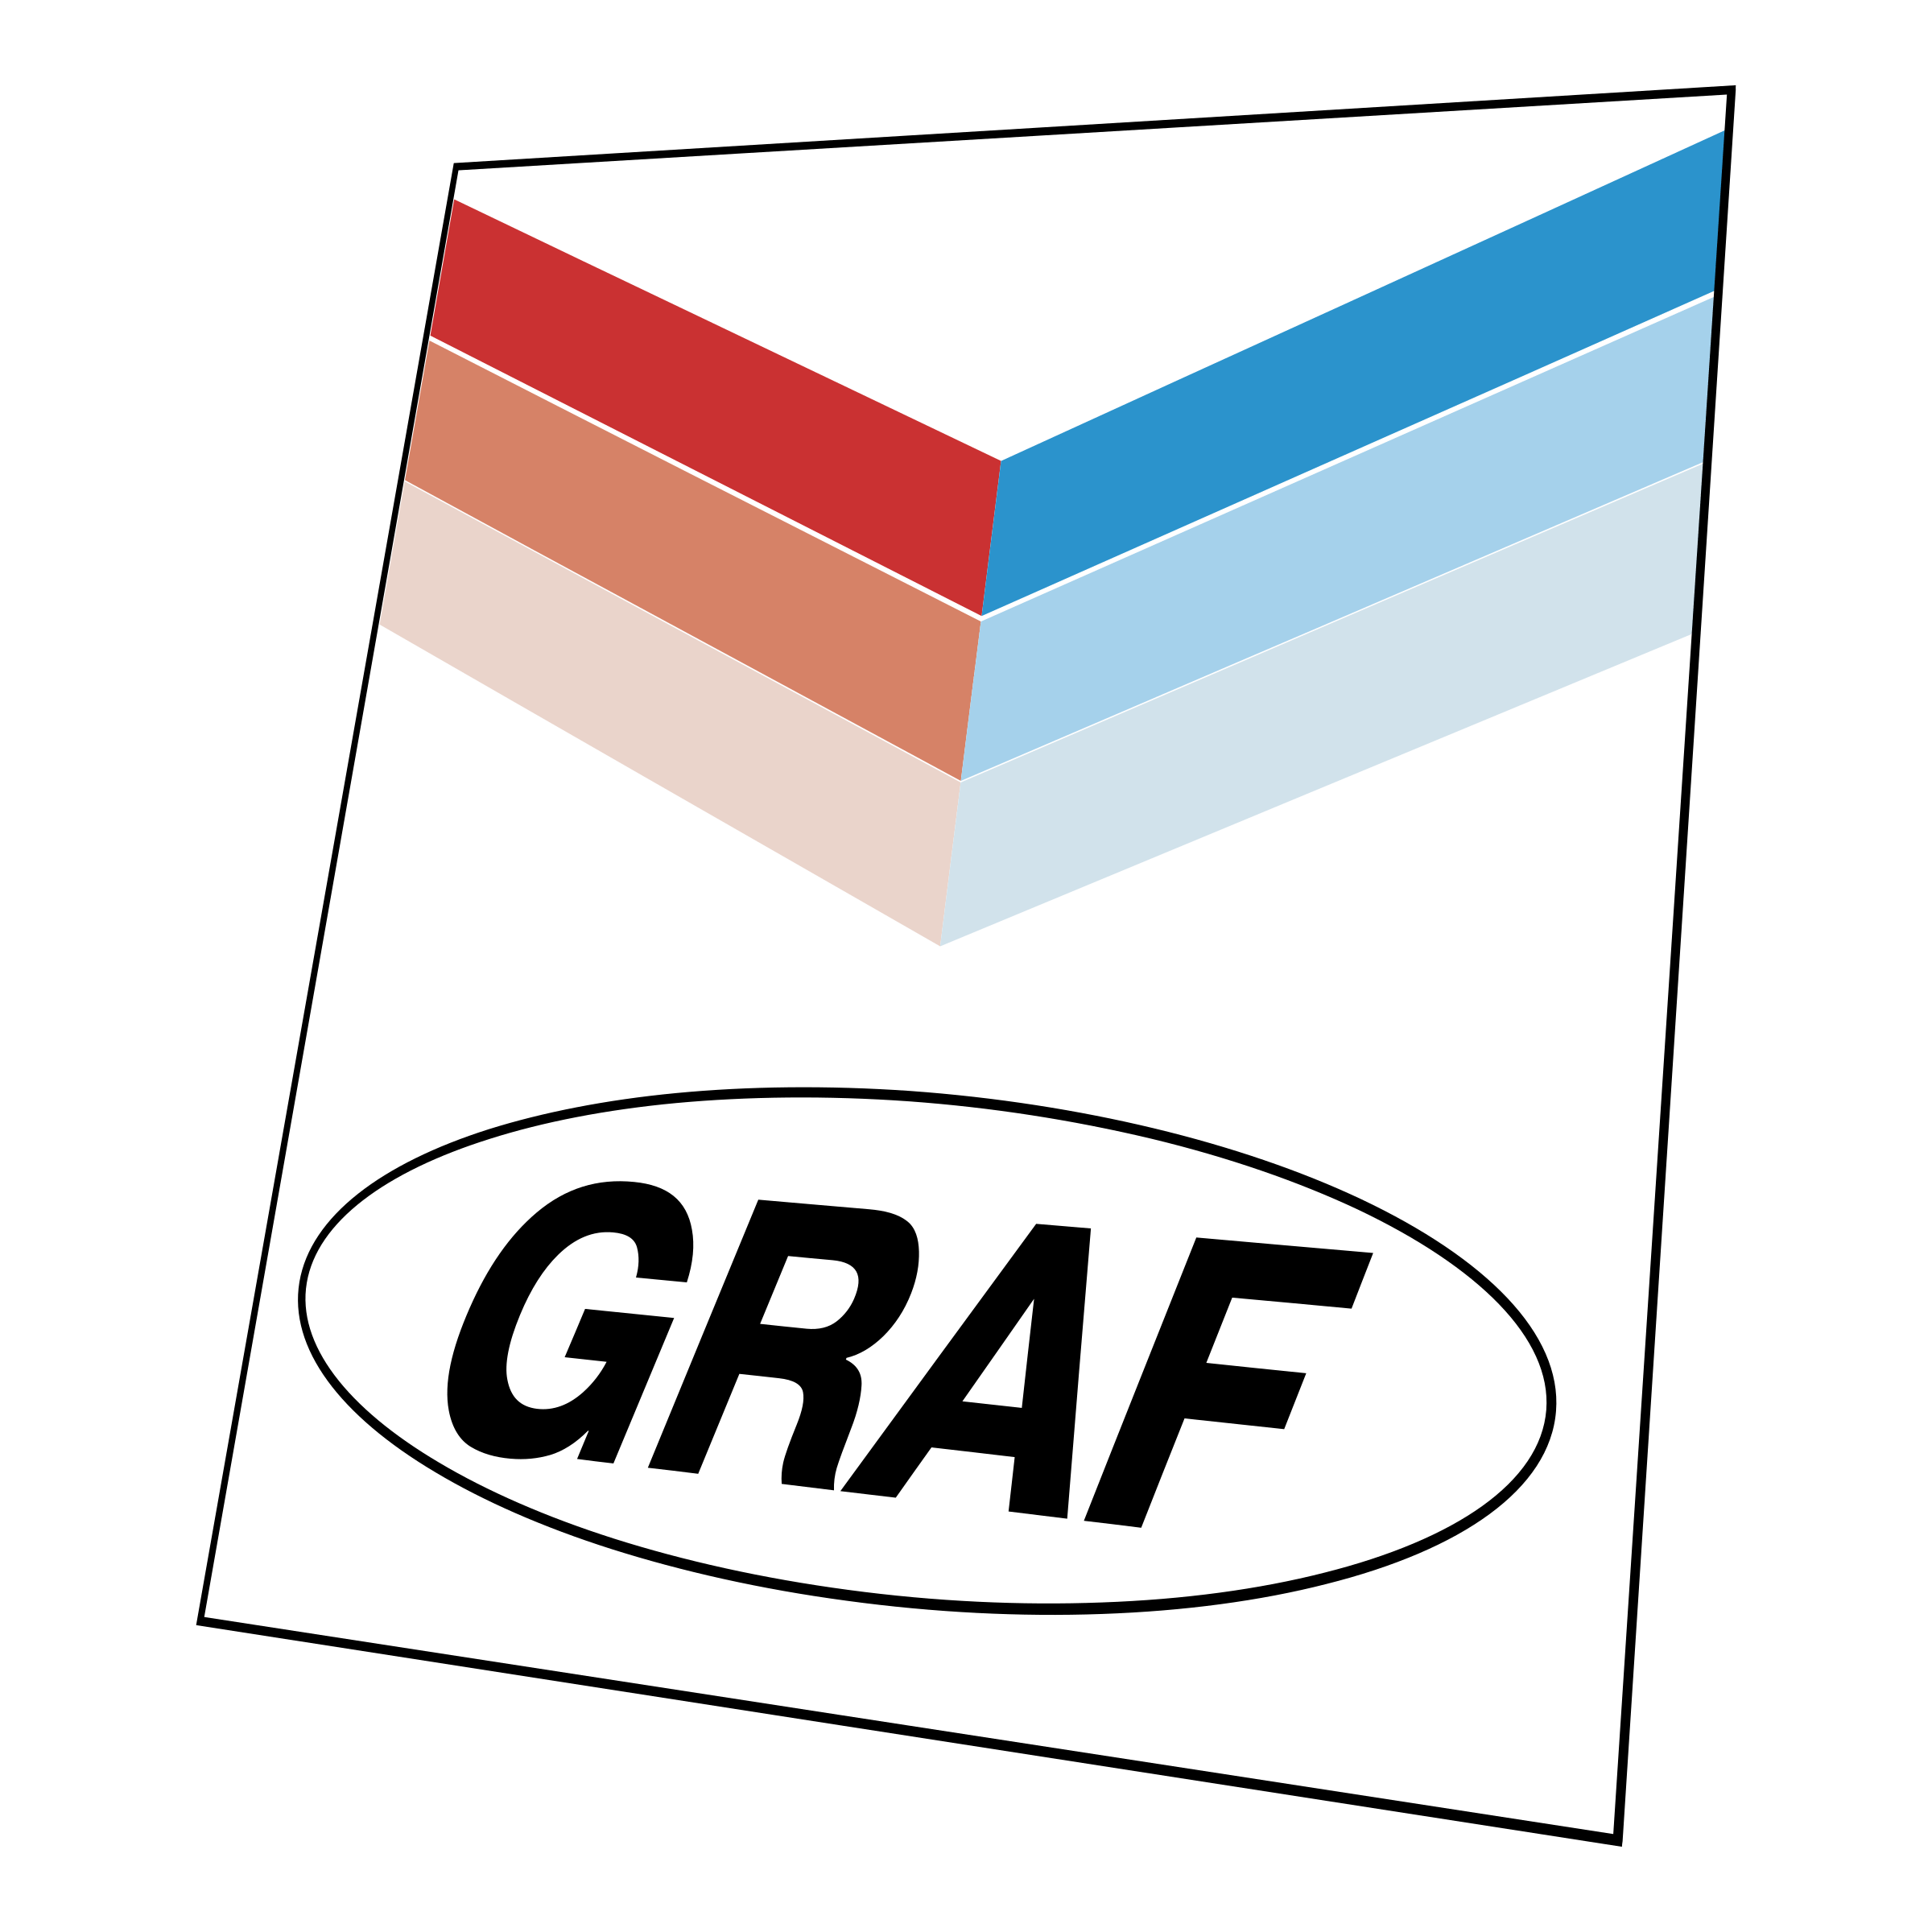 Graf Logo - Graf Logo PNG Transparent & SVG Vector - Freebie Supply